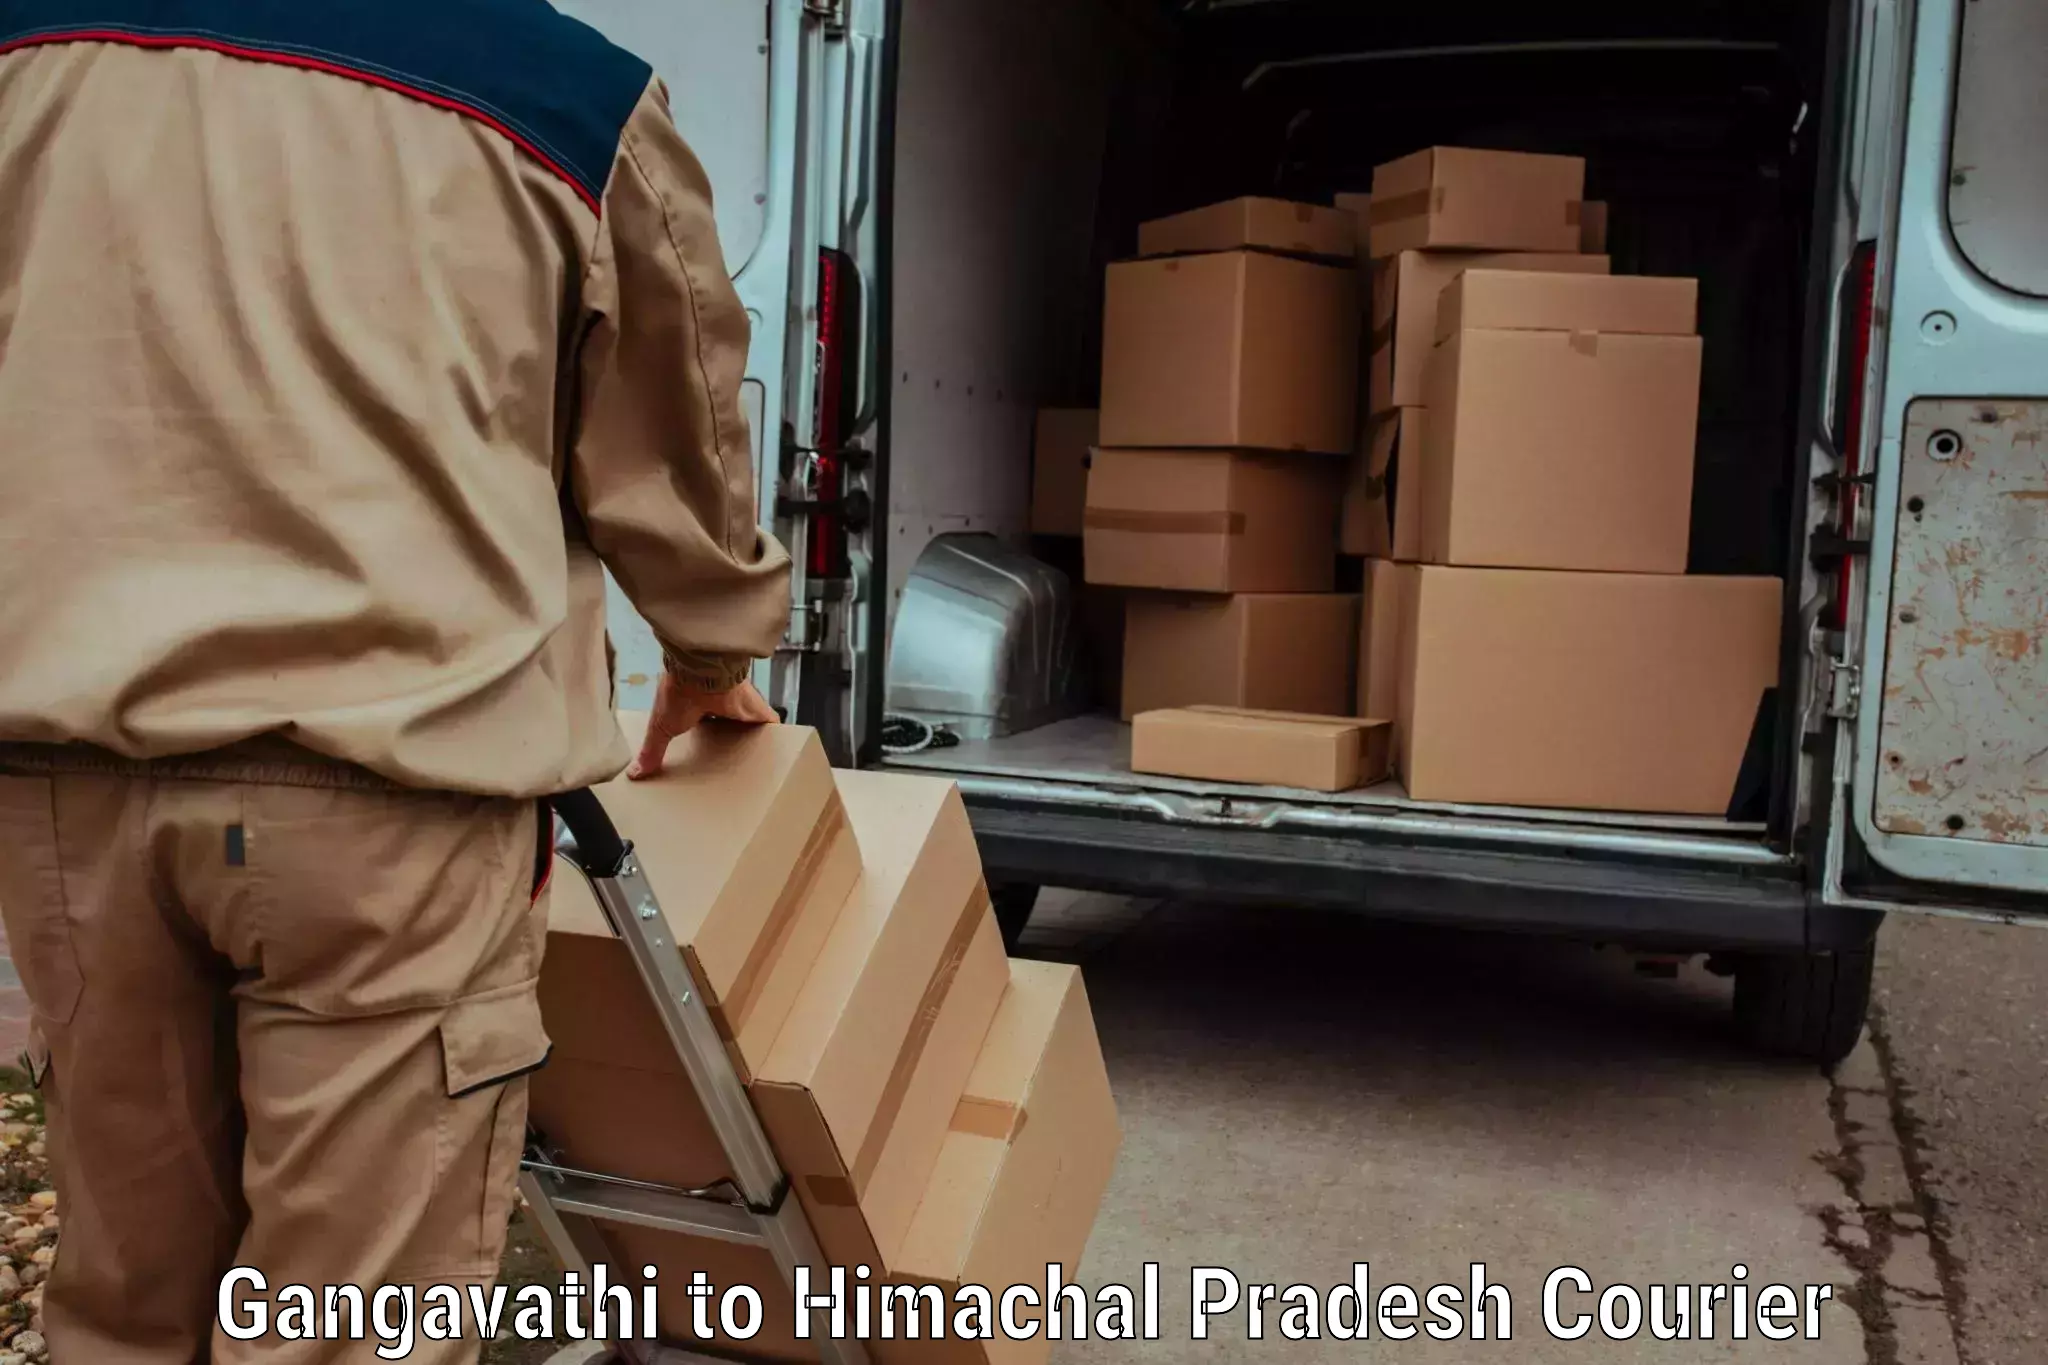 Courier service comparison Gangavathi to Indora